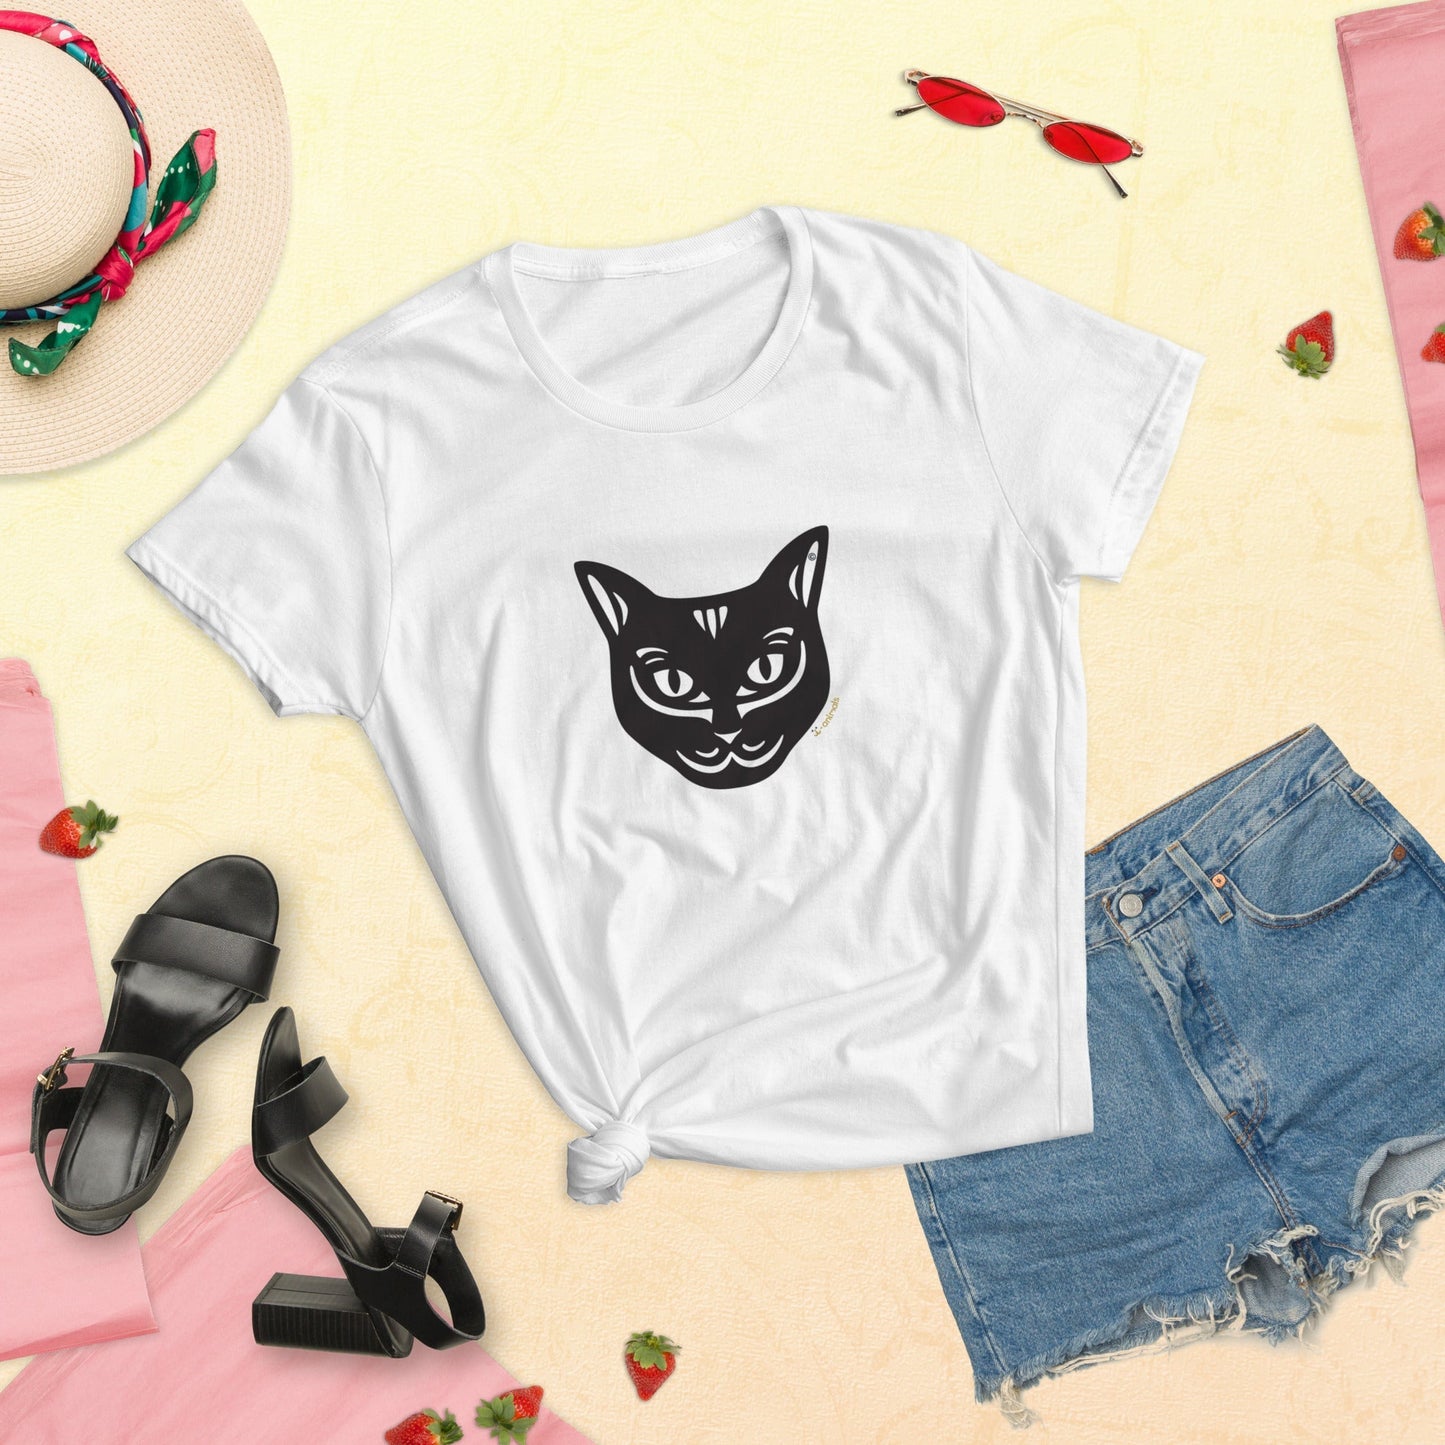 Camiseta feminina de manga curta - Gato Preto - Cores claras i-animals